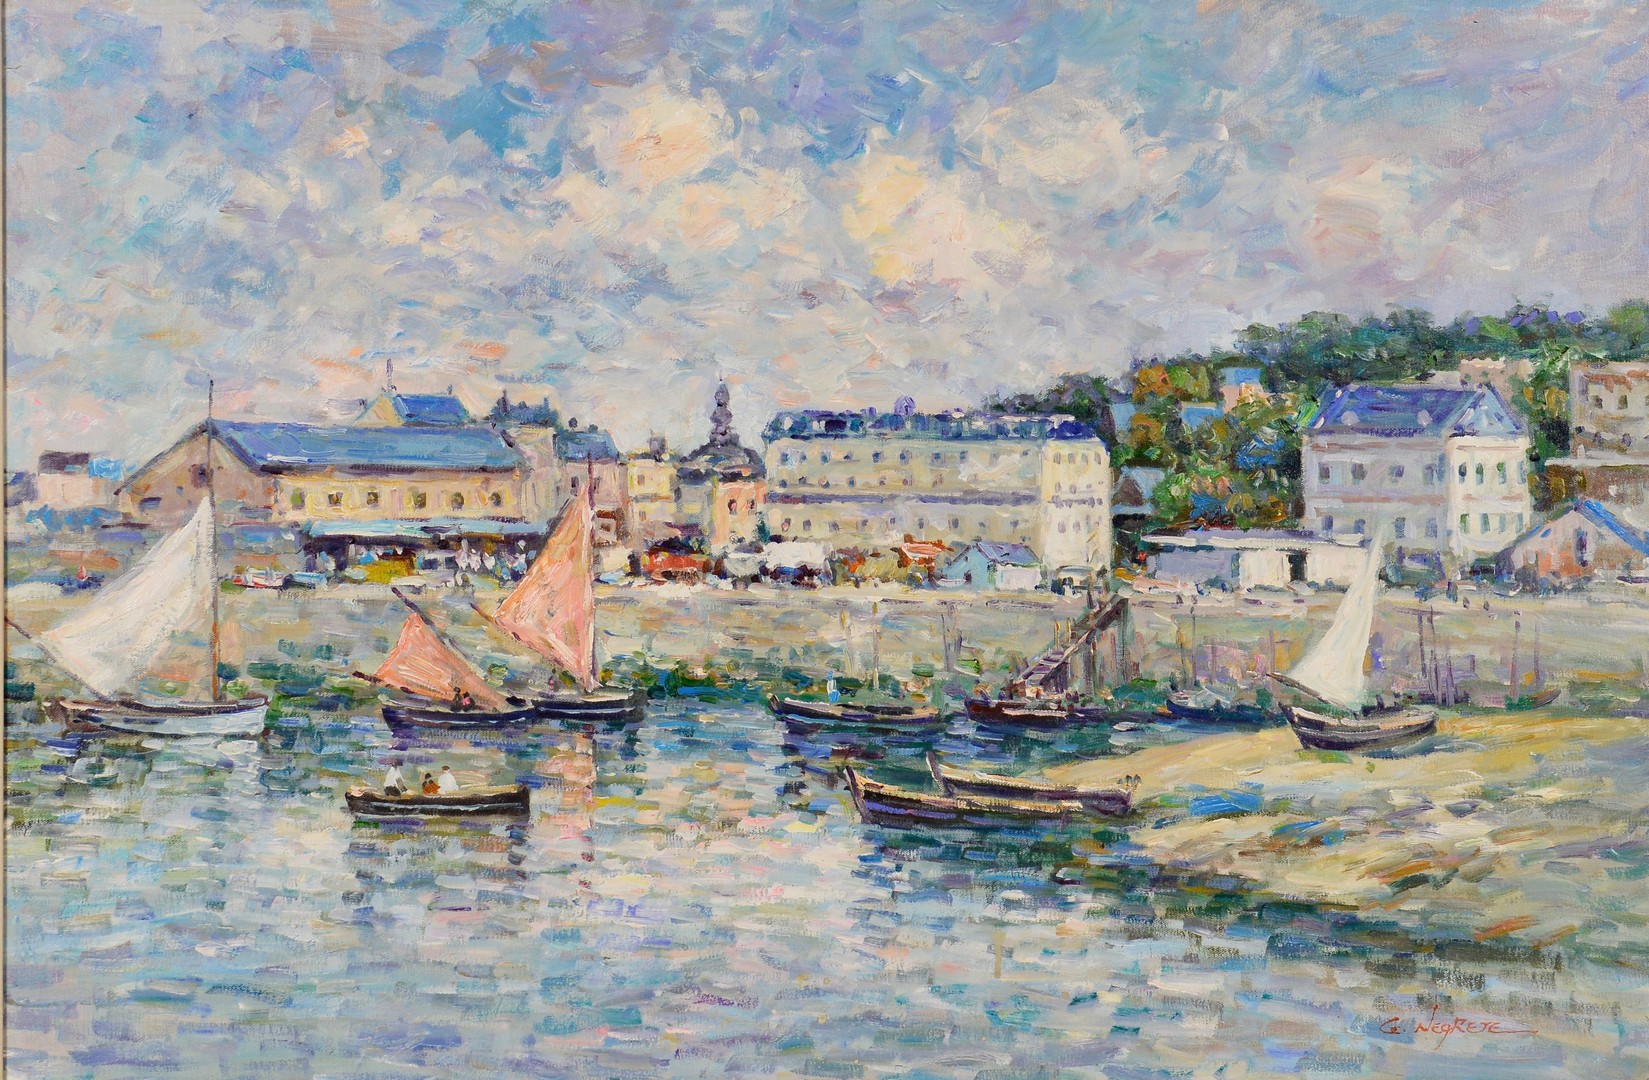 Lot 825: Impressionist Oil on Canvas, Negrete